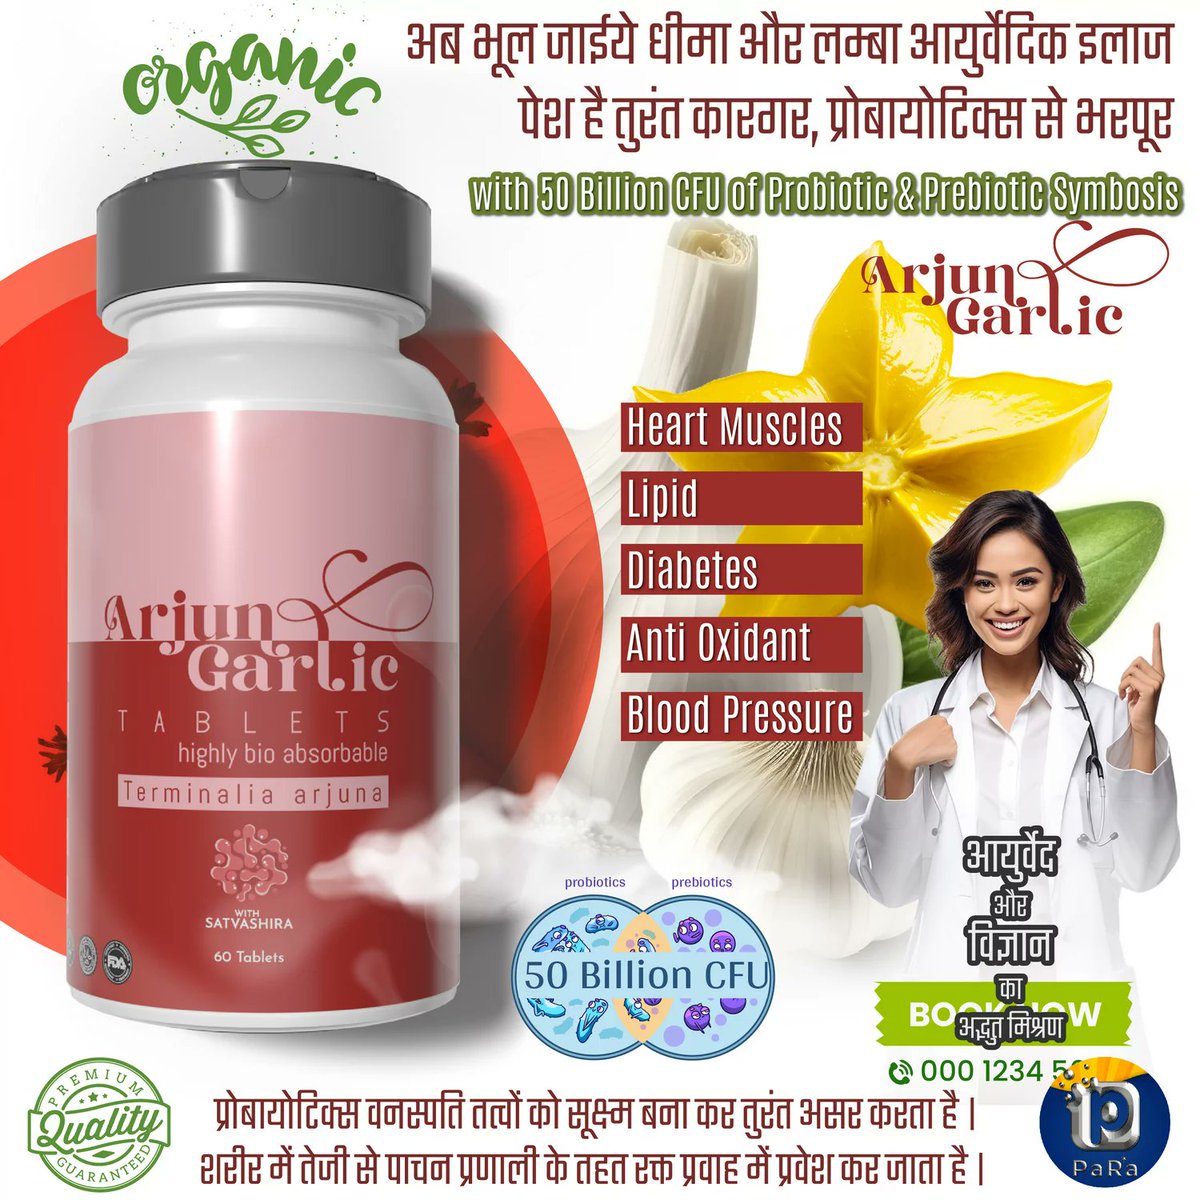 ORGANIC BIO ARJUNA GARLIC AND PROBIOTIC (60 TABLETS) 

More Product Information Call 7385071643 

#organic #arjuna #phytoatomy #probiotic #diabetscare